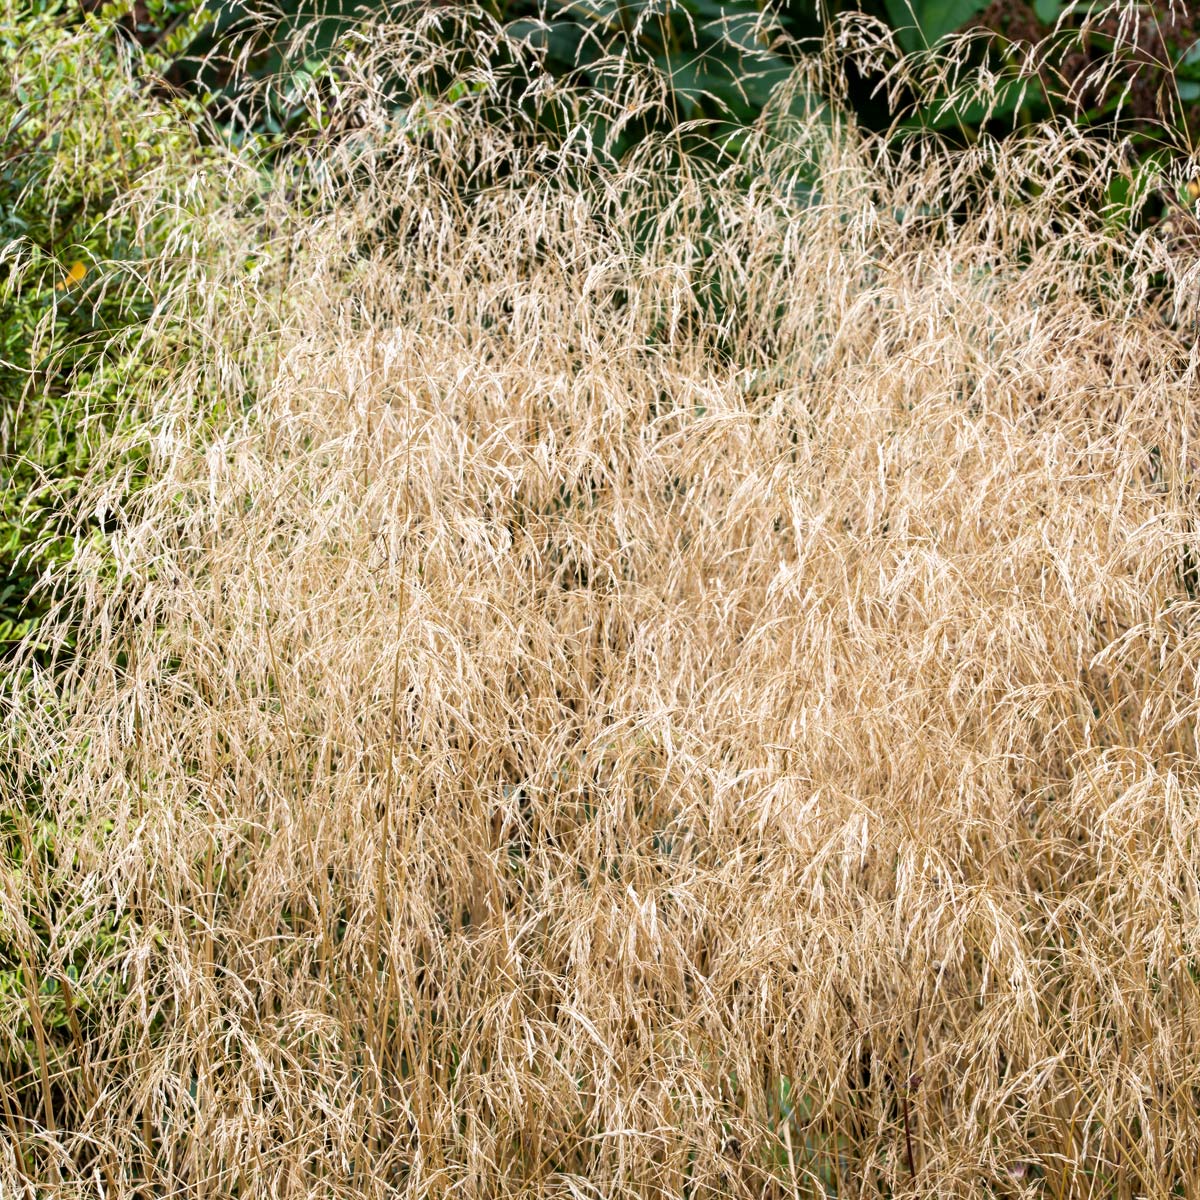 Deschampsia cespitosa 'Goldtau' (Tufted Hair Grass)